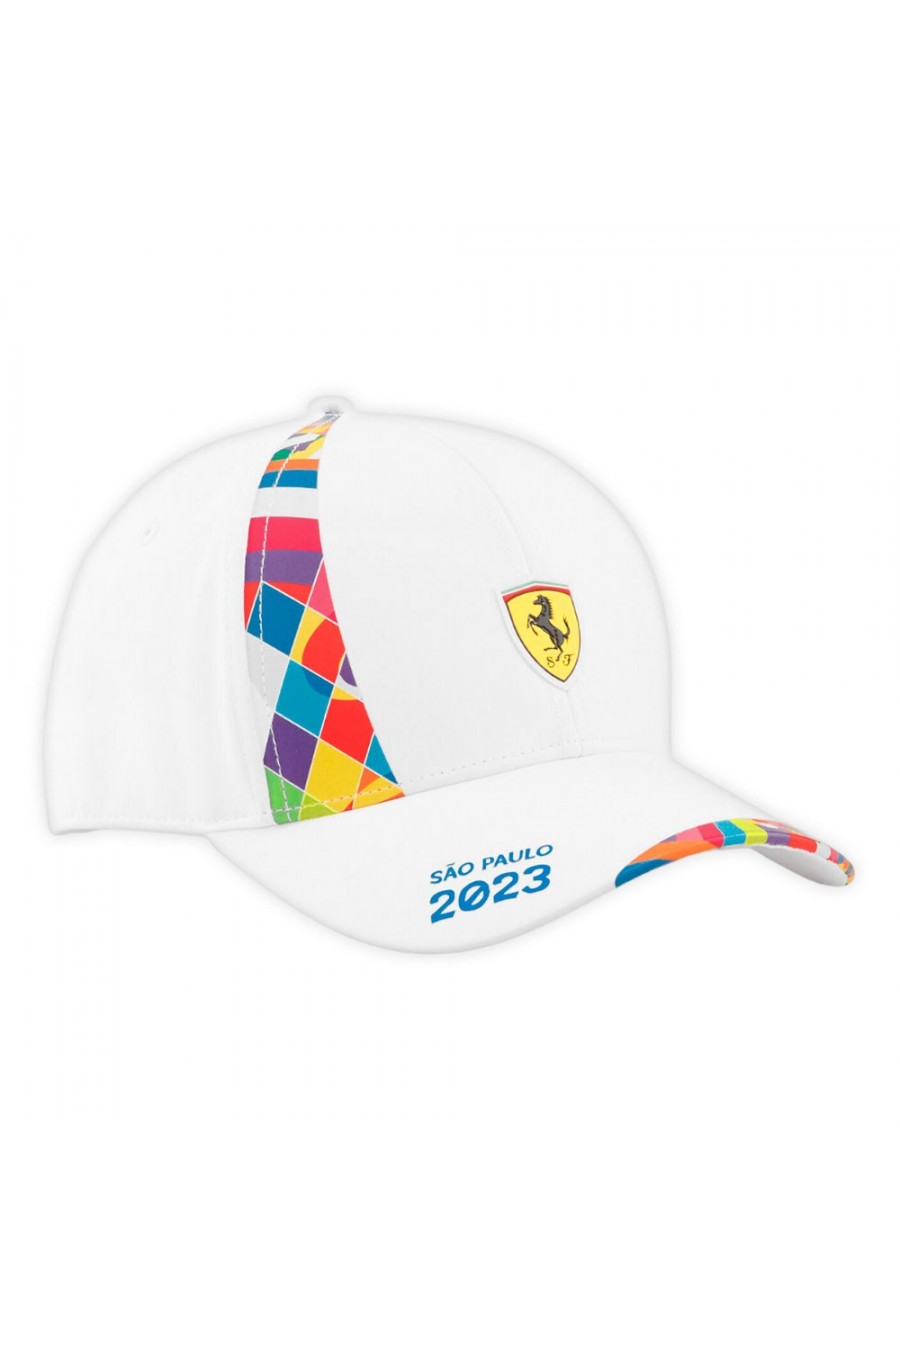 Acquista Cappellino Ferrari F1 GP Brasile. Disponibile in bianco